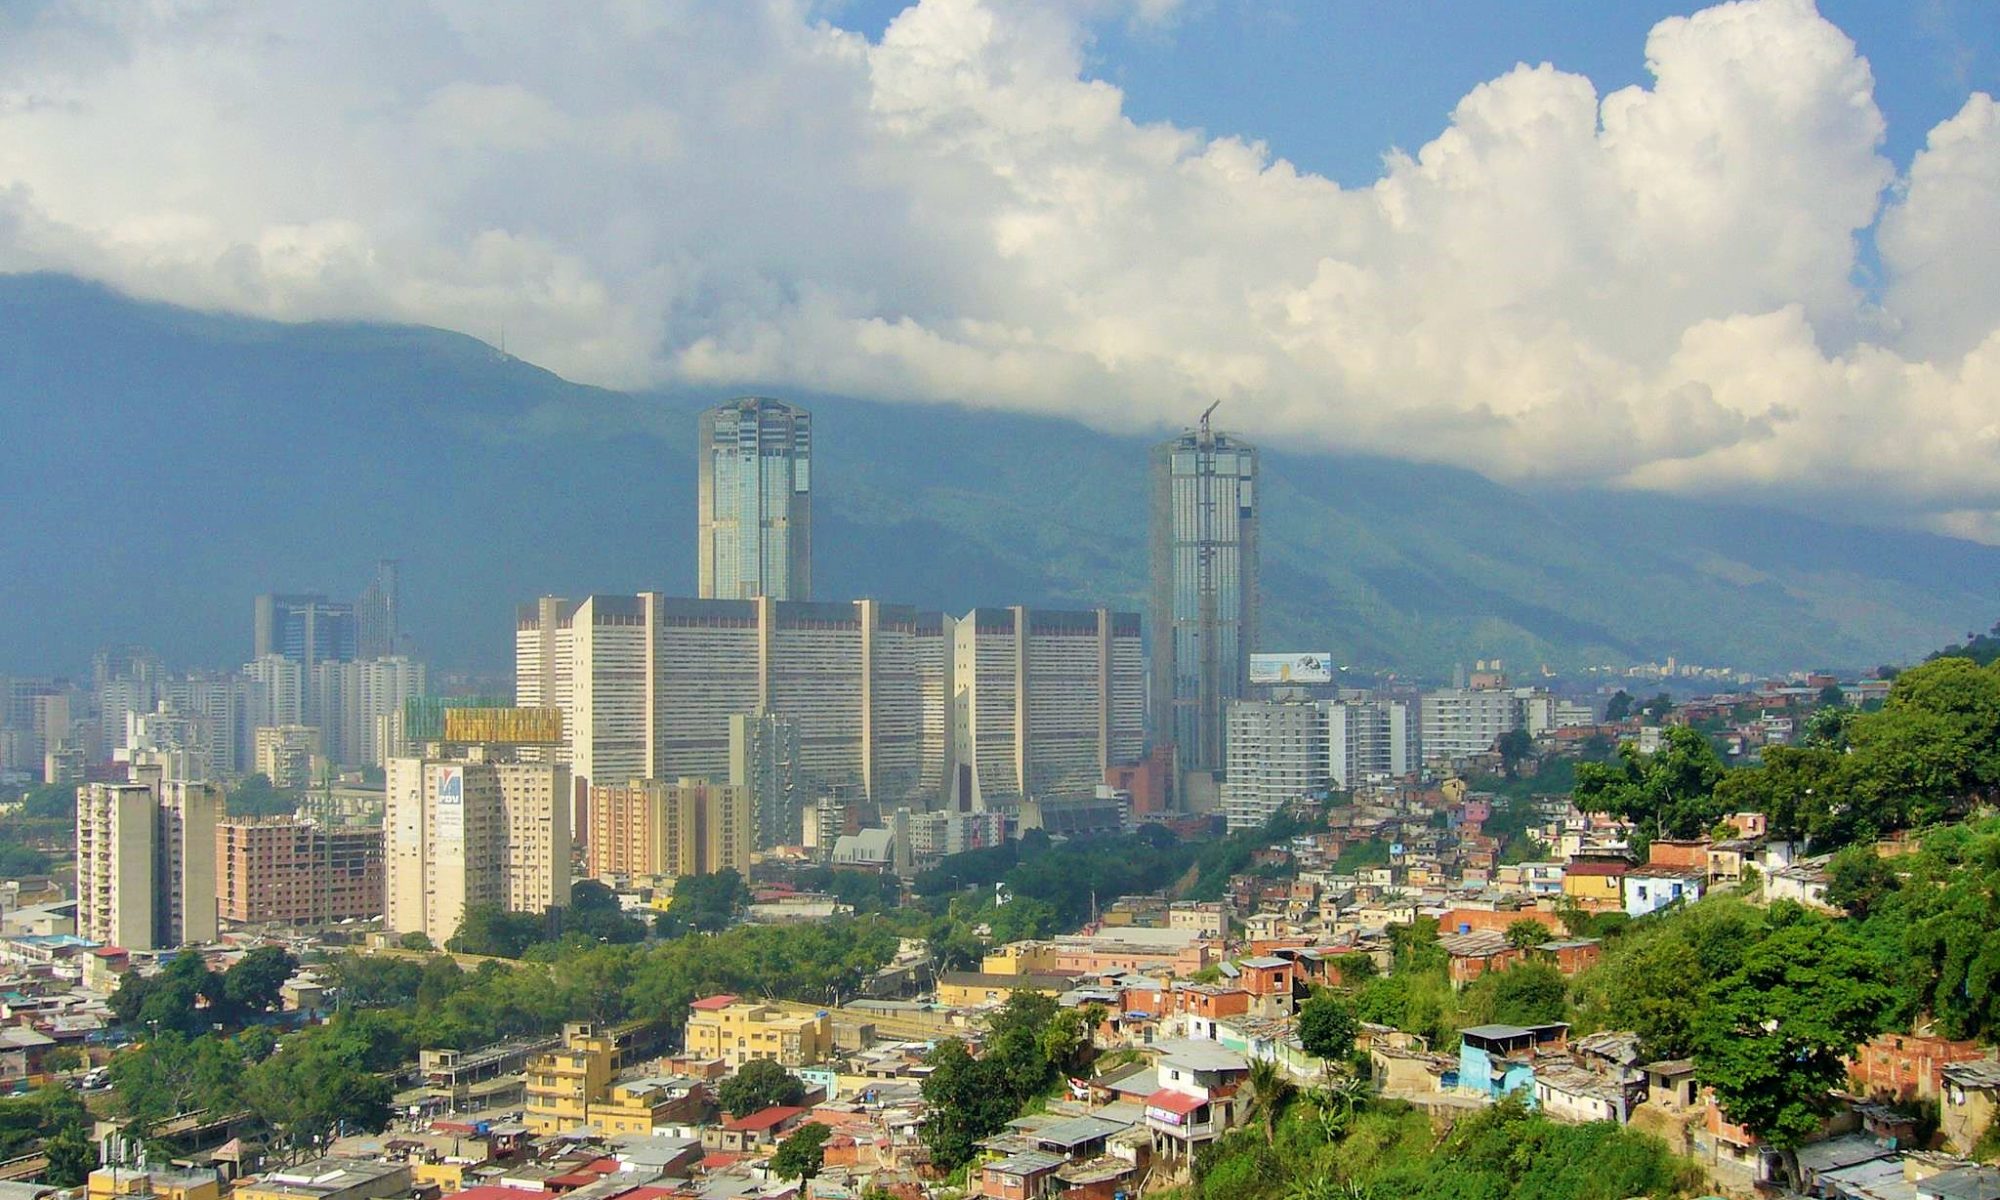 VENEZUELA: Caracas - City Report | Vagabundler